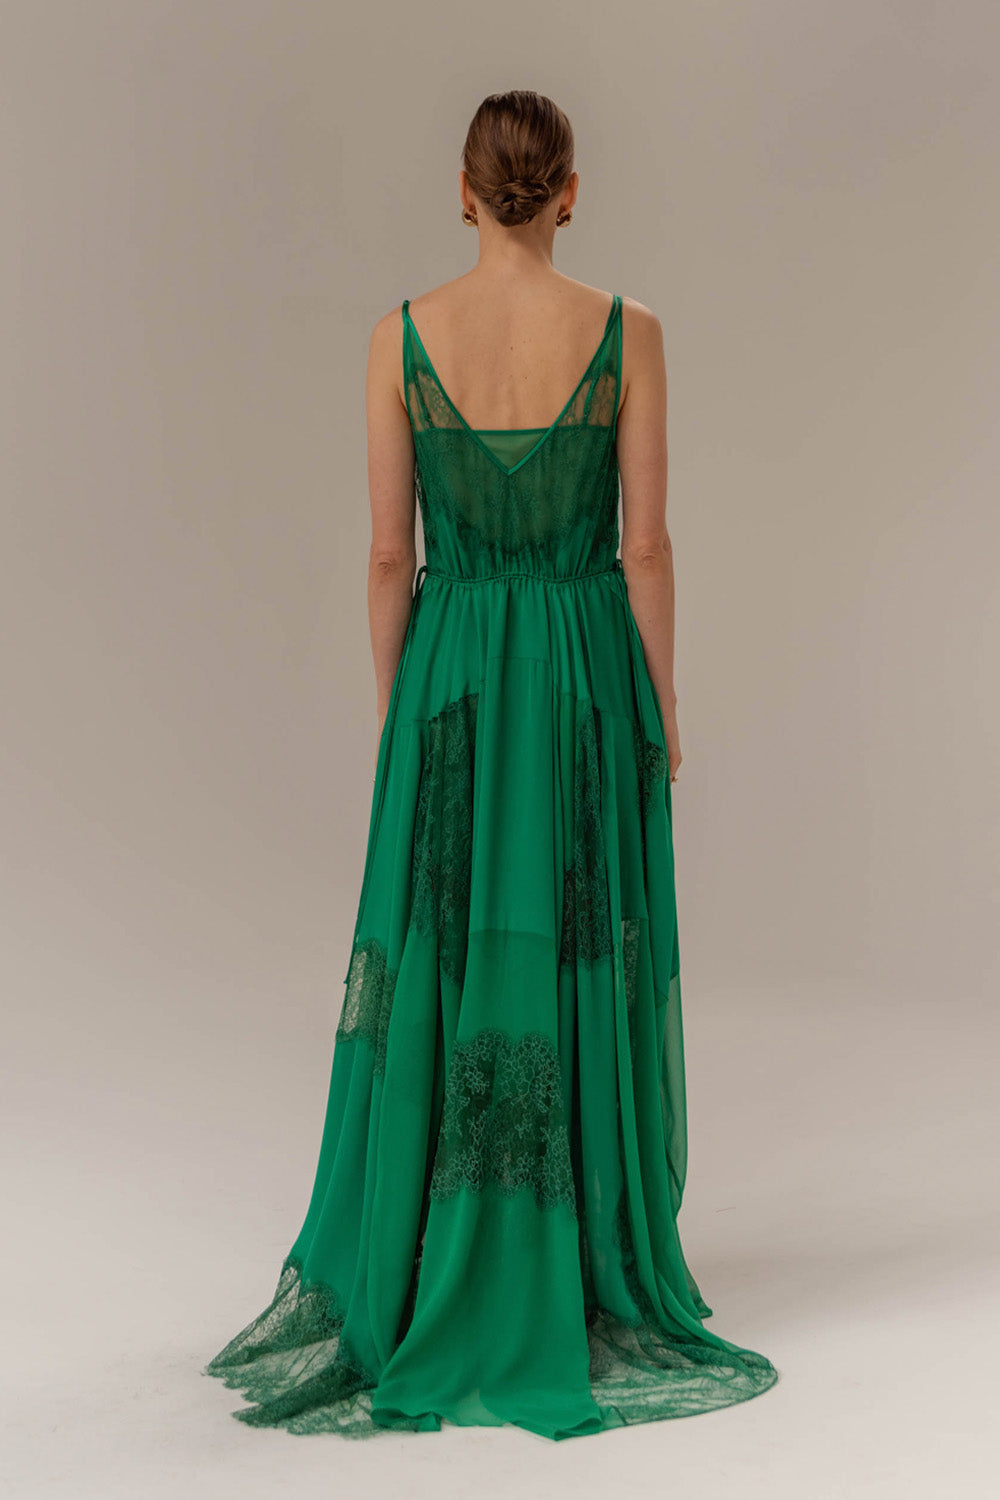 Josephine Dress in Emerald